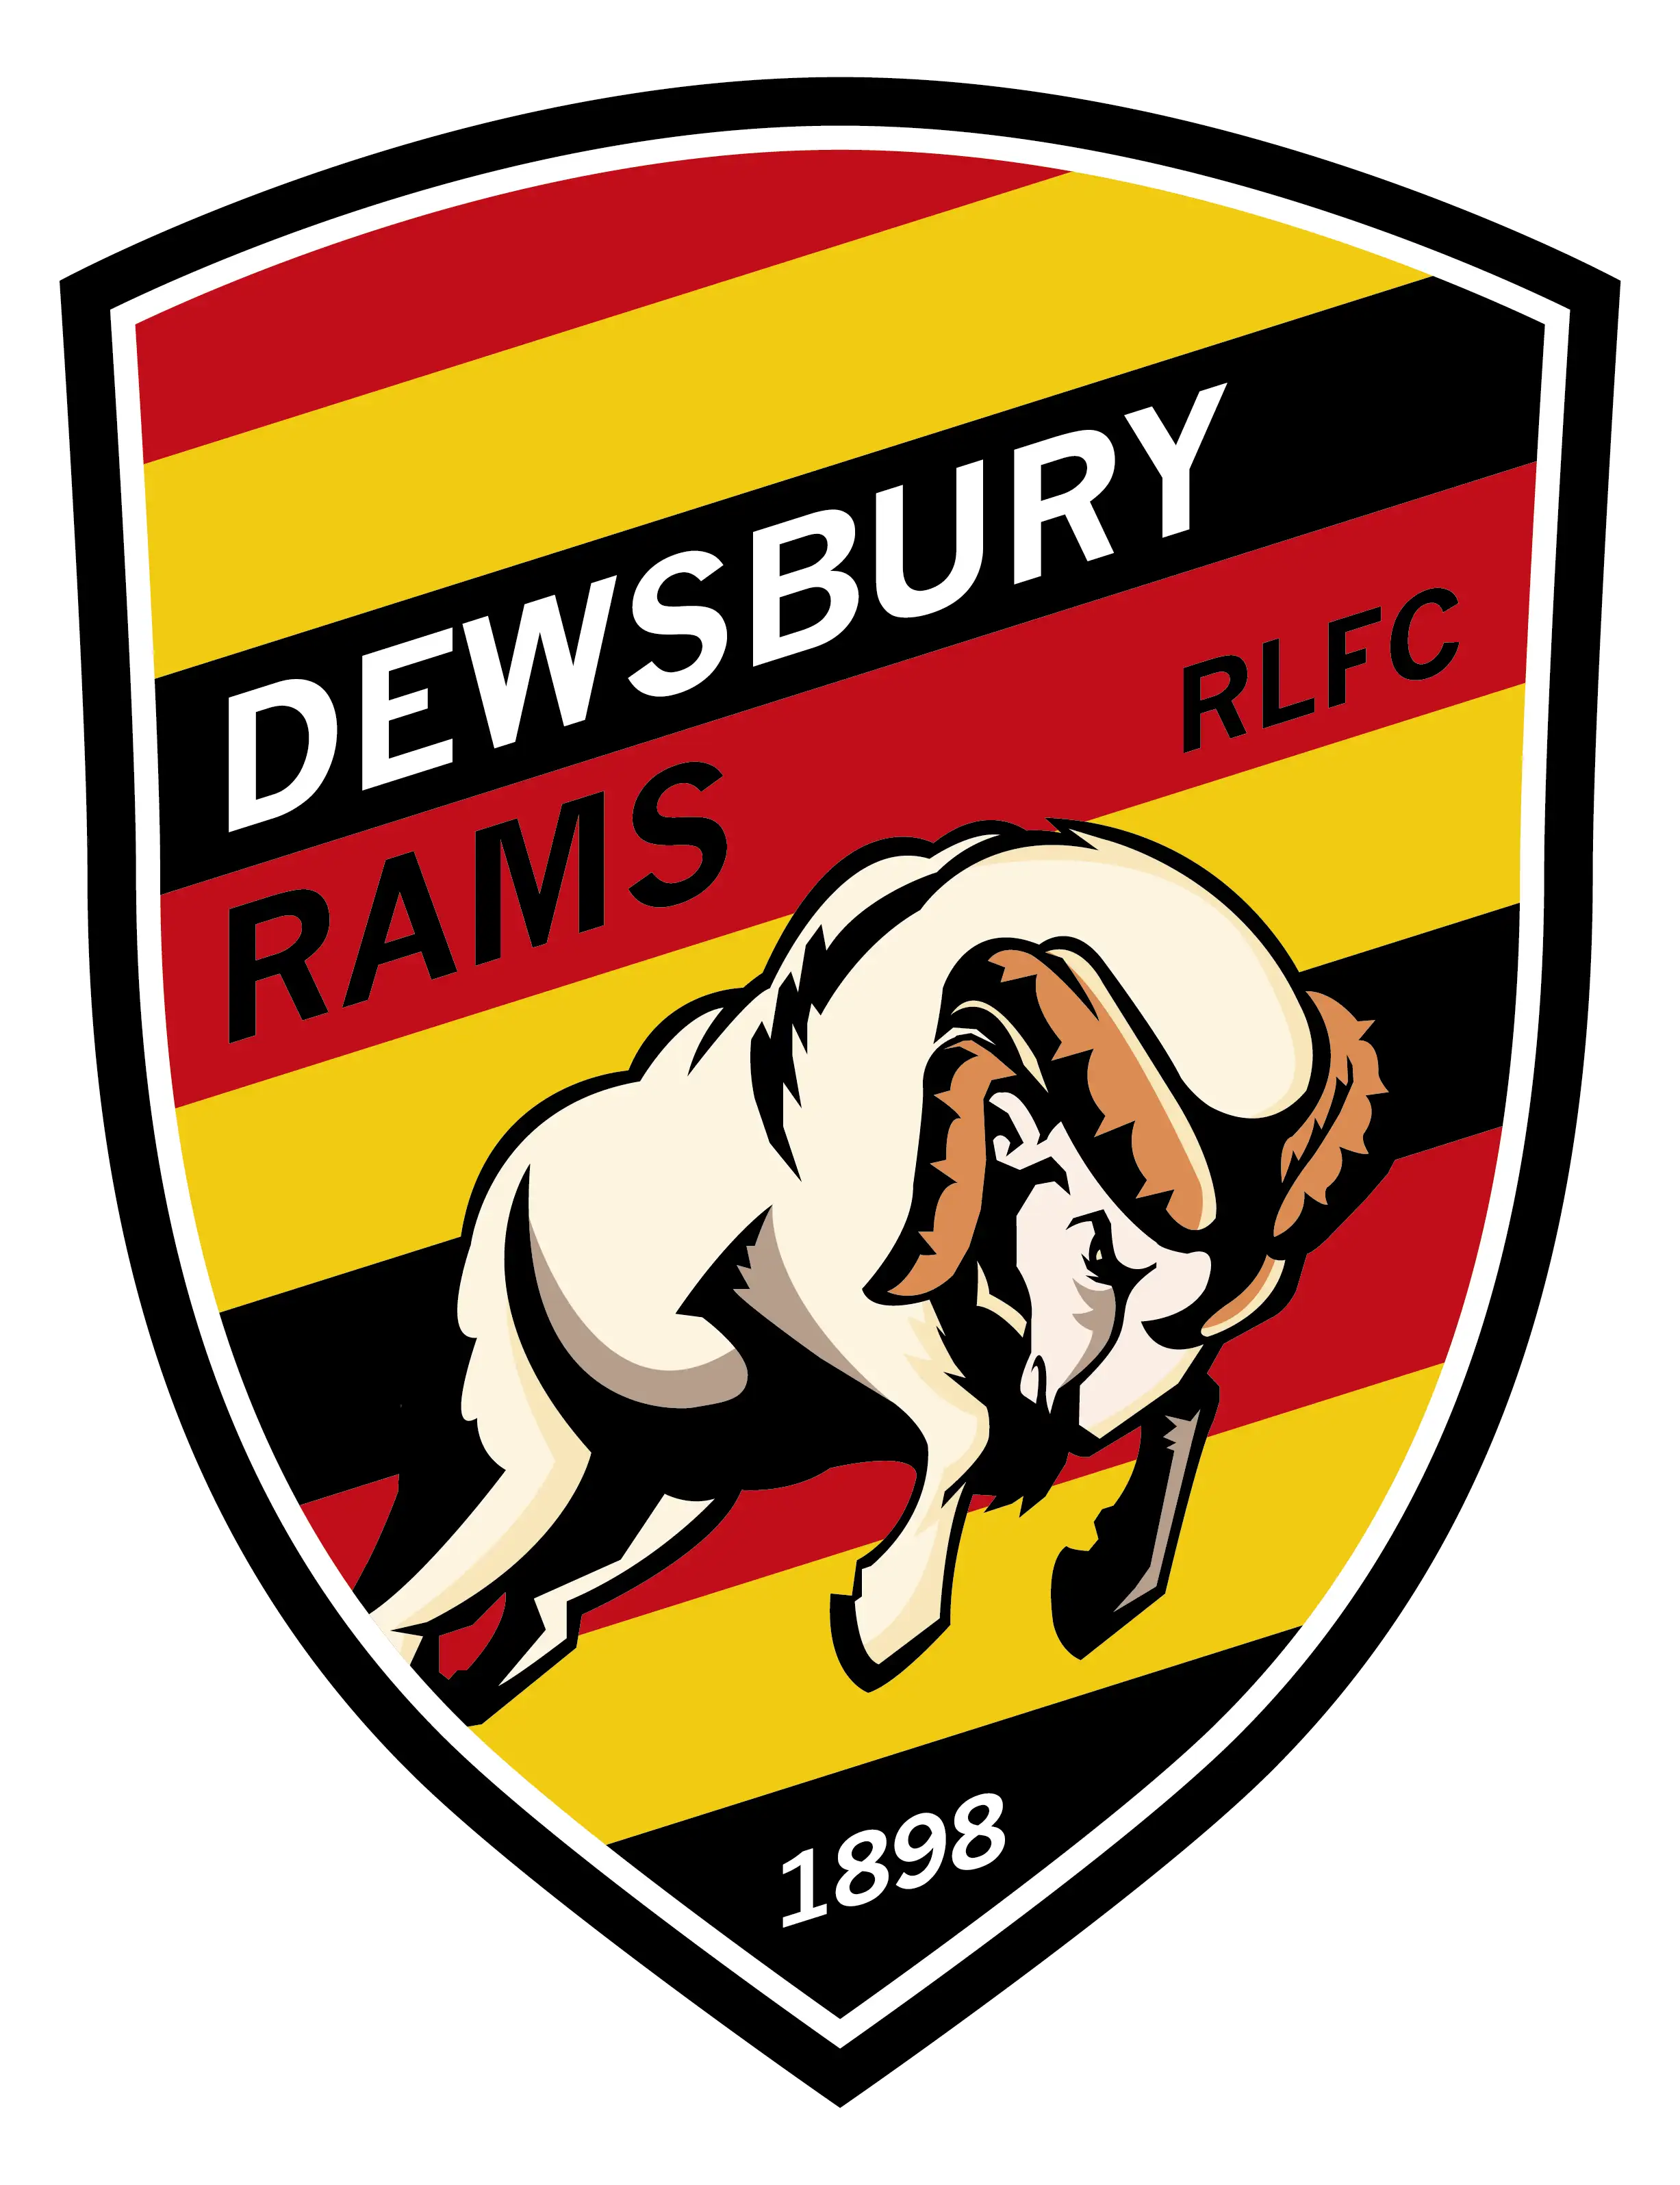 Dewsbury Rams snatch Adam Ryder from League One